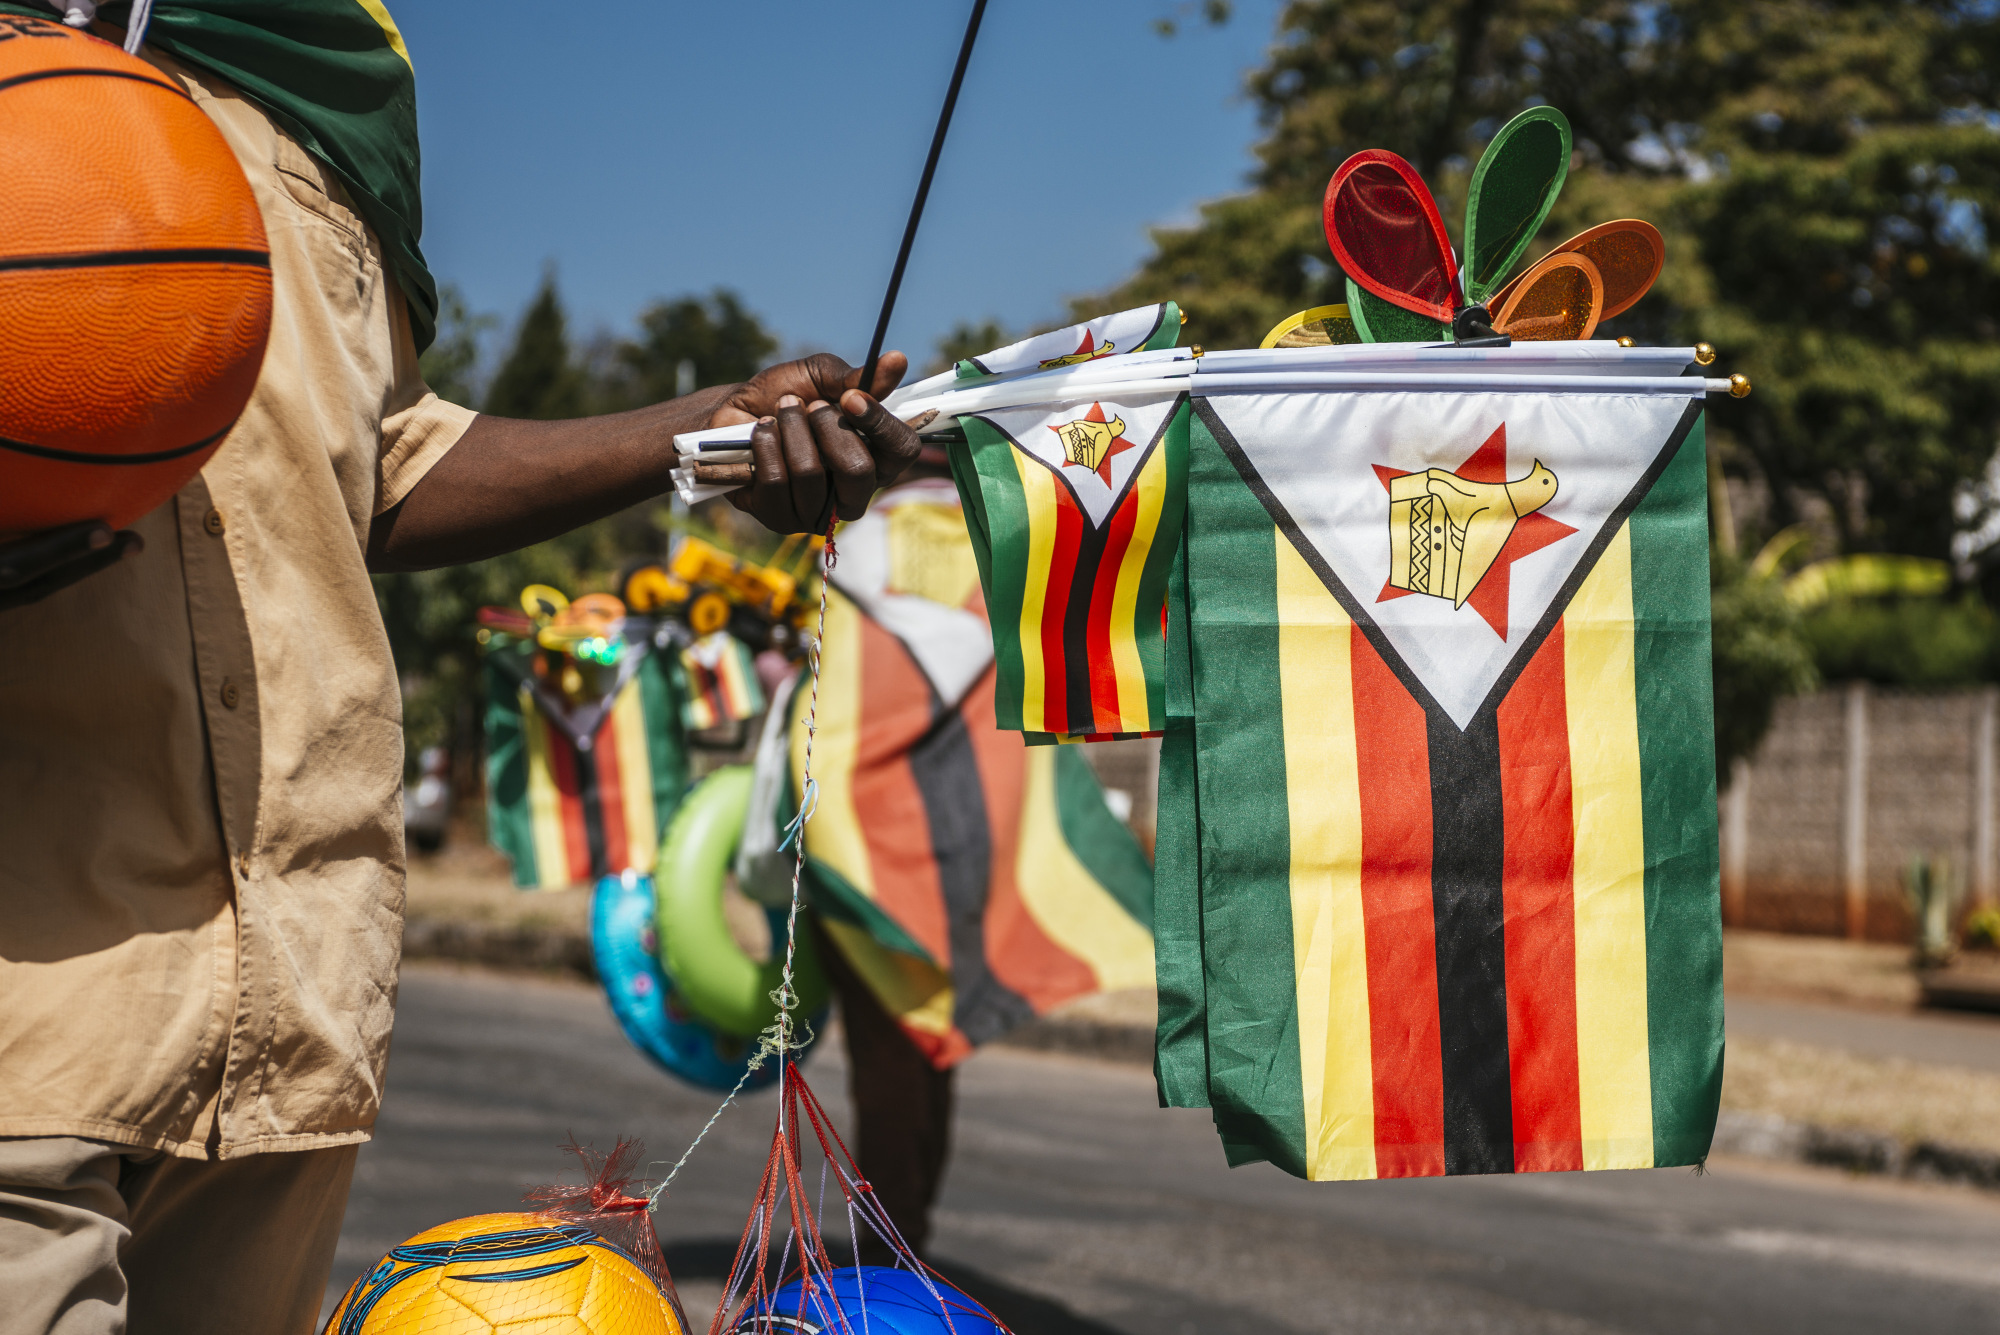 A street vendor displays Zimbabwean flags for sale in Harare, Zimbabwe.